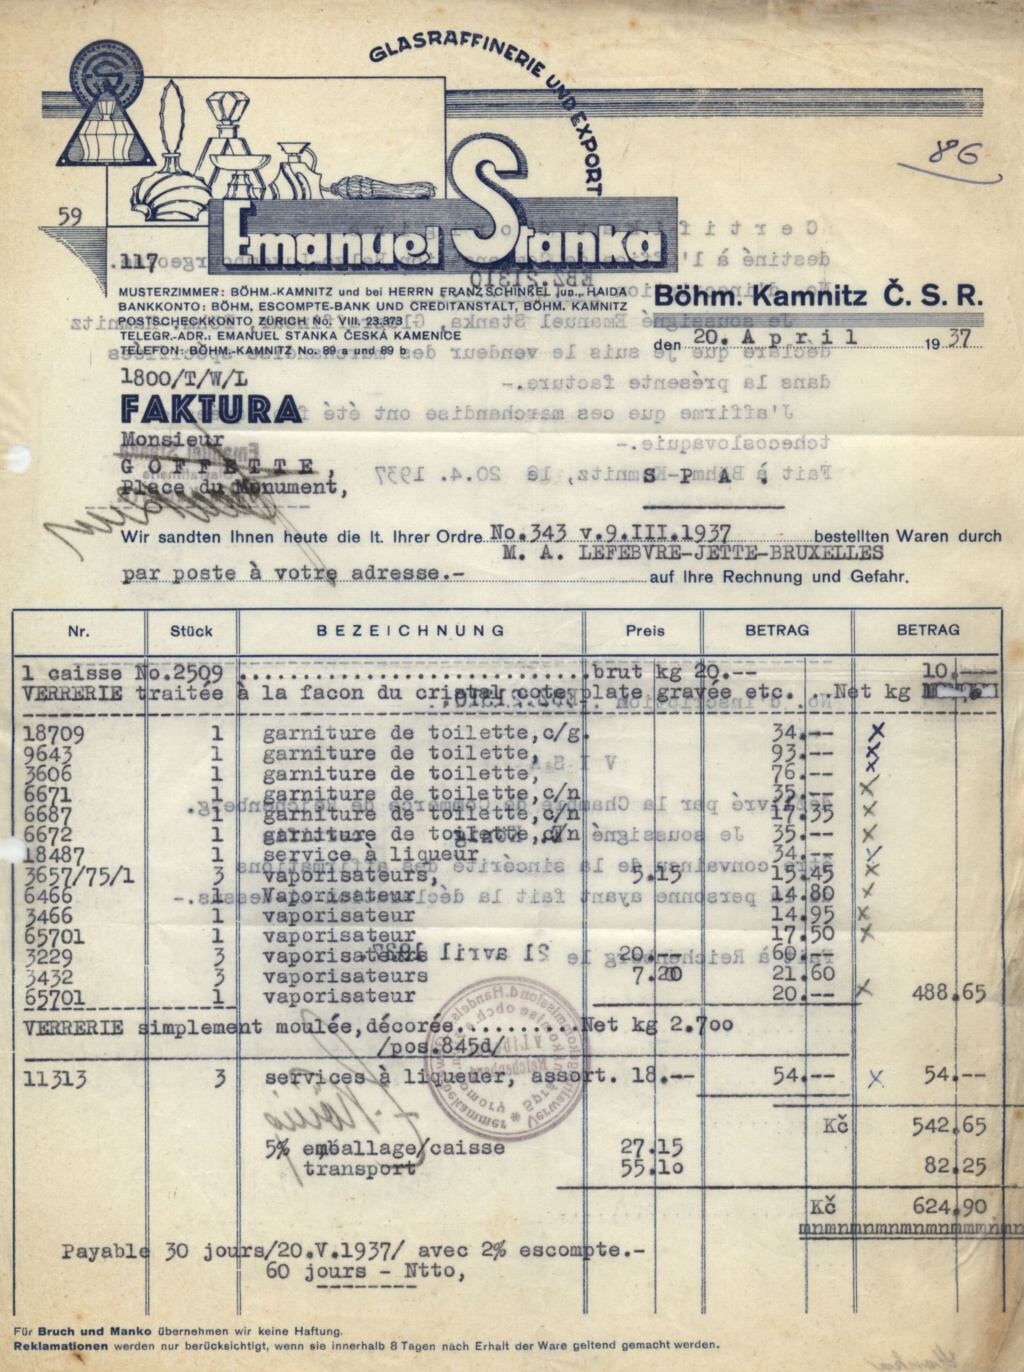 "Emanuel Stanka 1937 (front)"